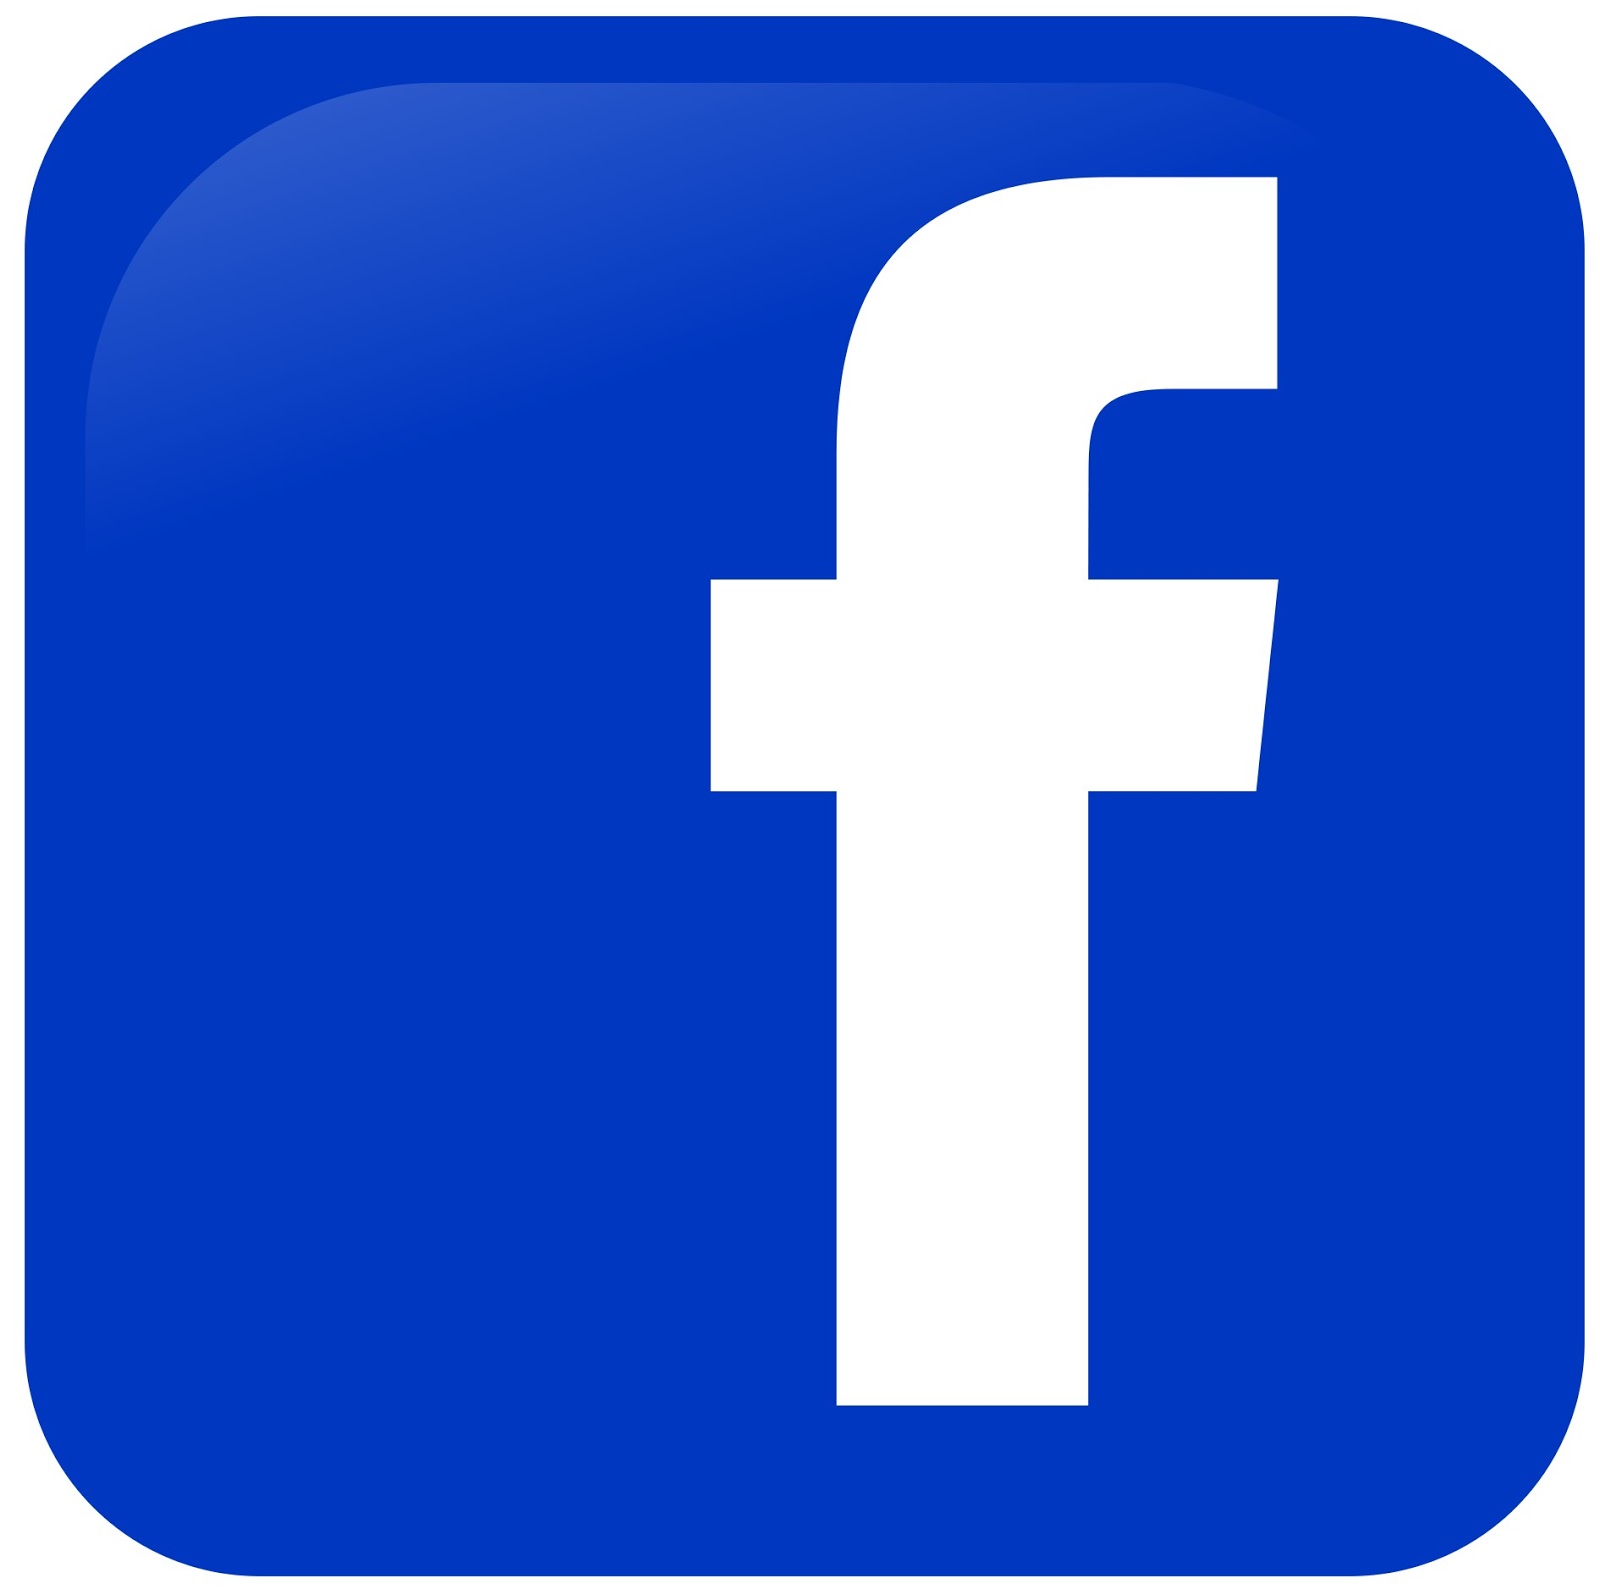 Facebook logo vector free download clipart - Clipartix